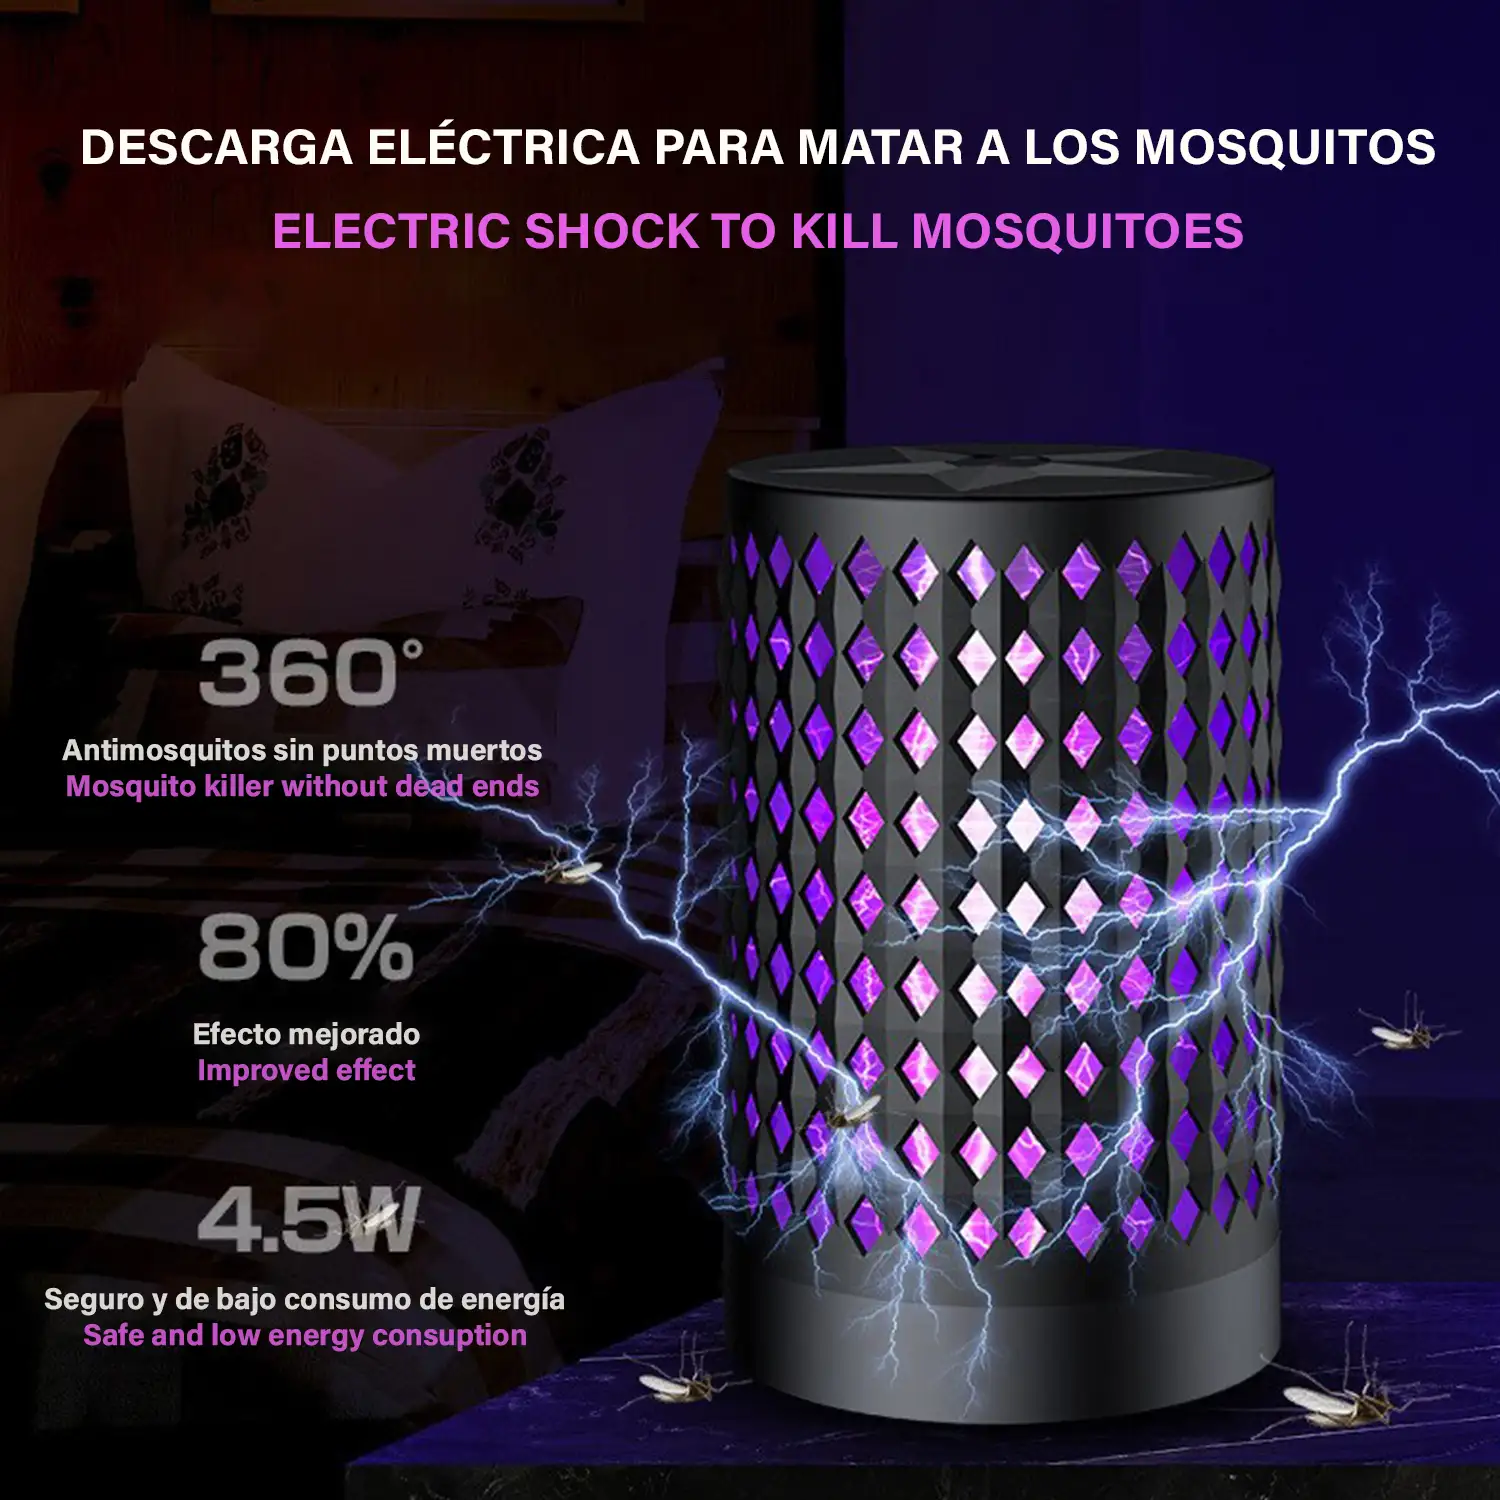 Atrapa mosquitos eléctrico, con luz led. Mata mosquitos por descarga eléctrica. Maya externa de seguridad.